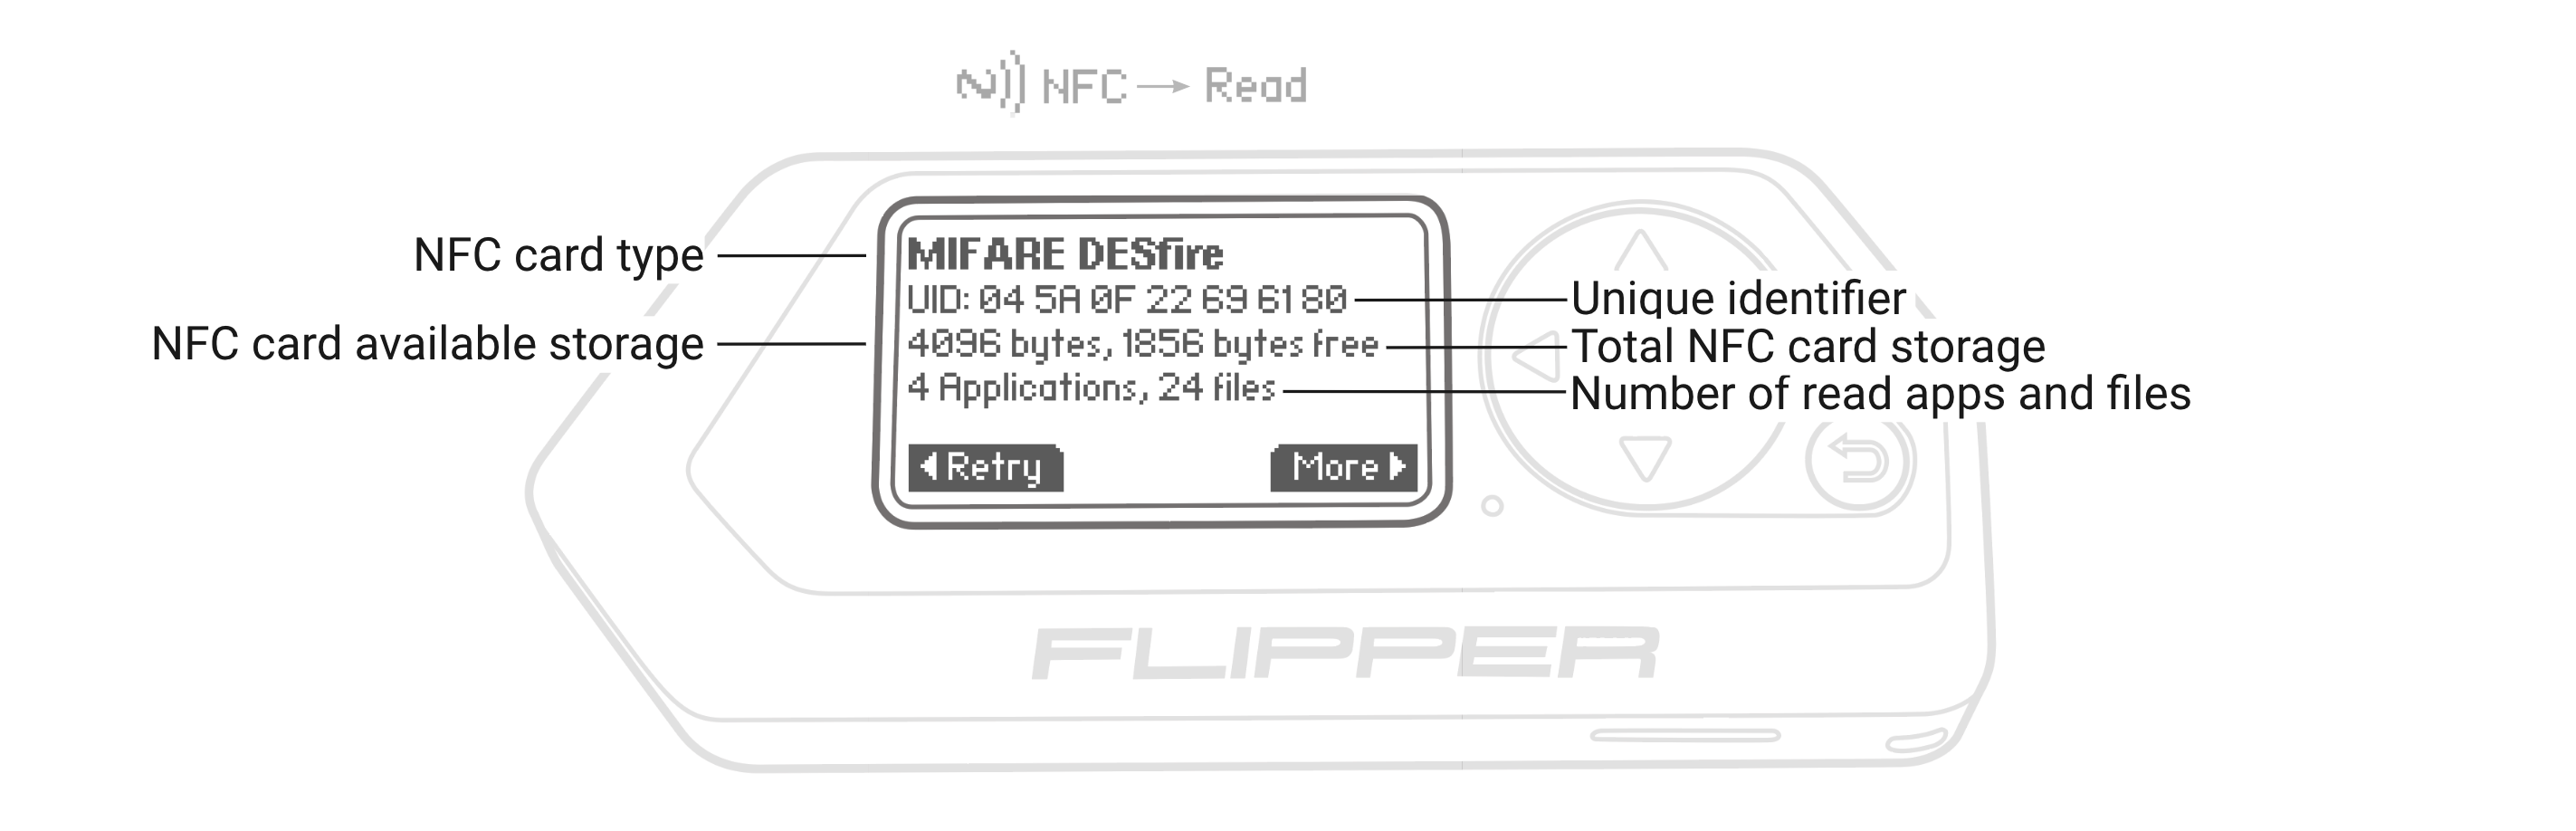 MIFARE DESFire reading screen